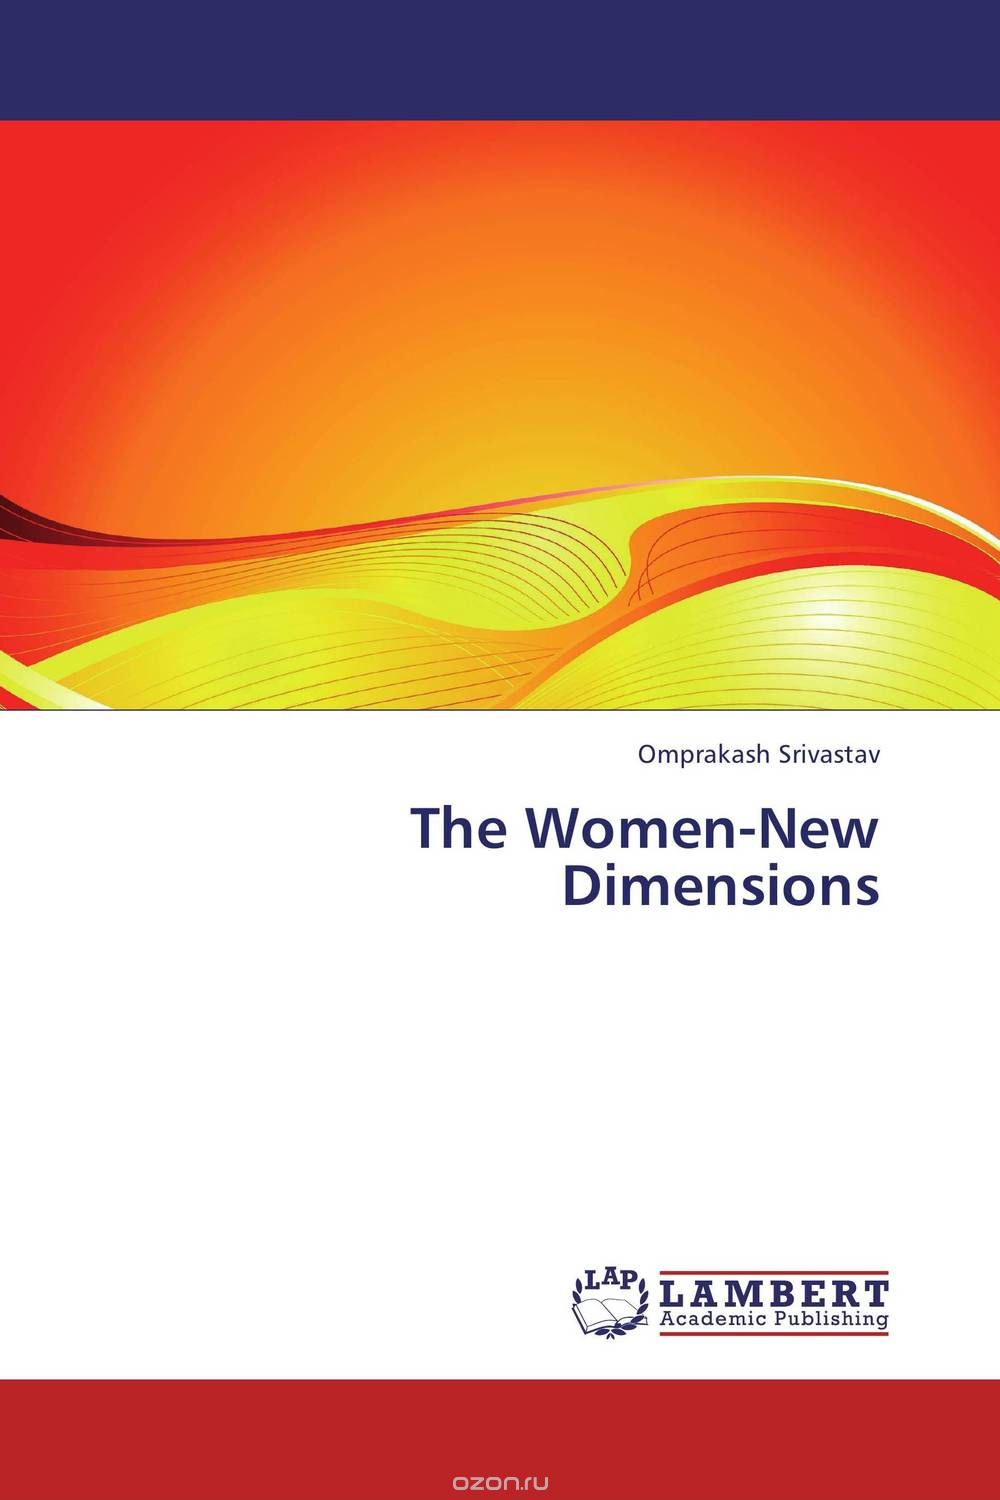 Скачать книгу "The Women-New Dimensions"